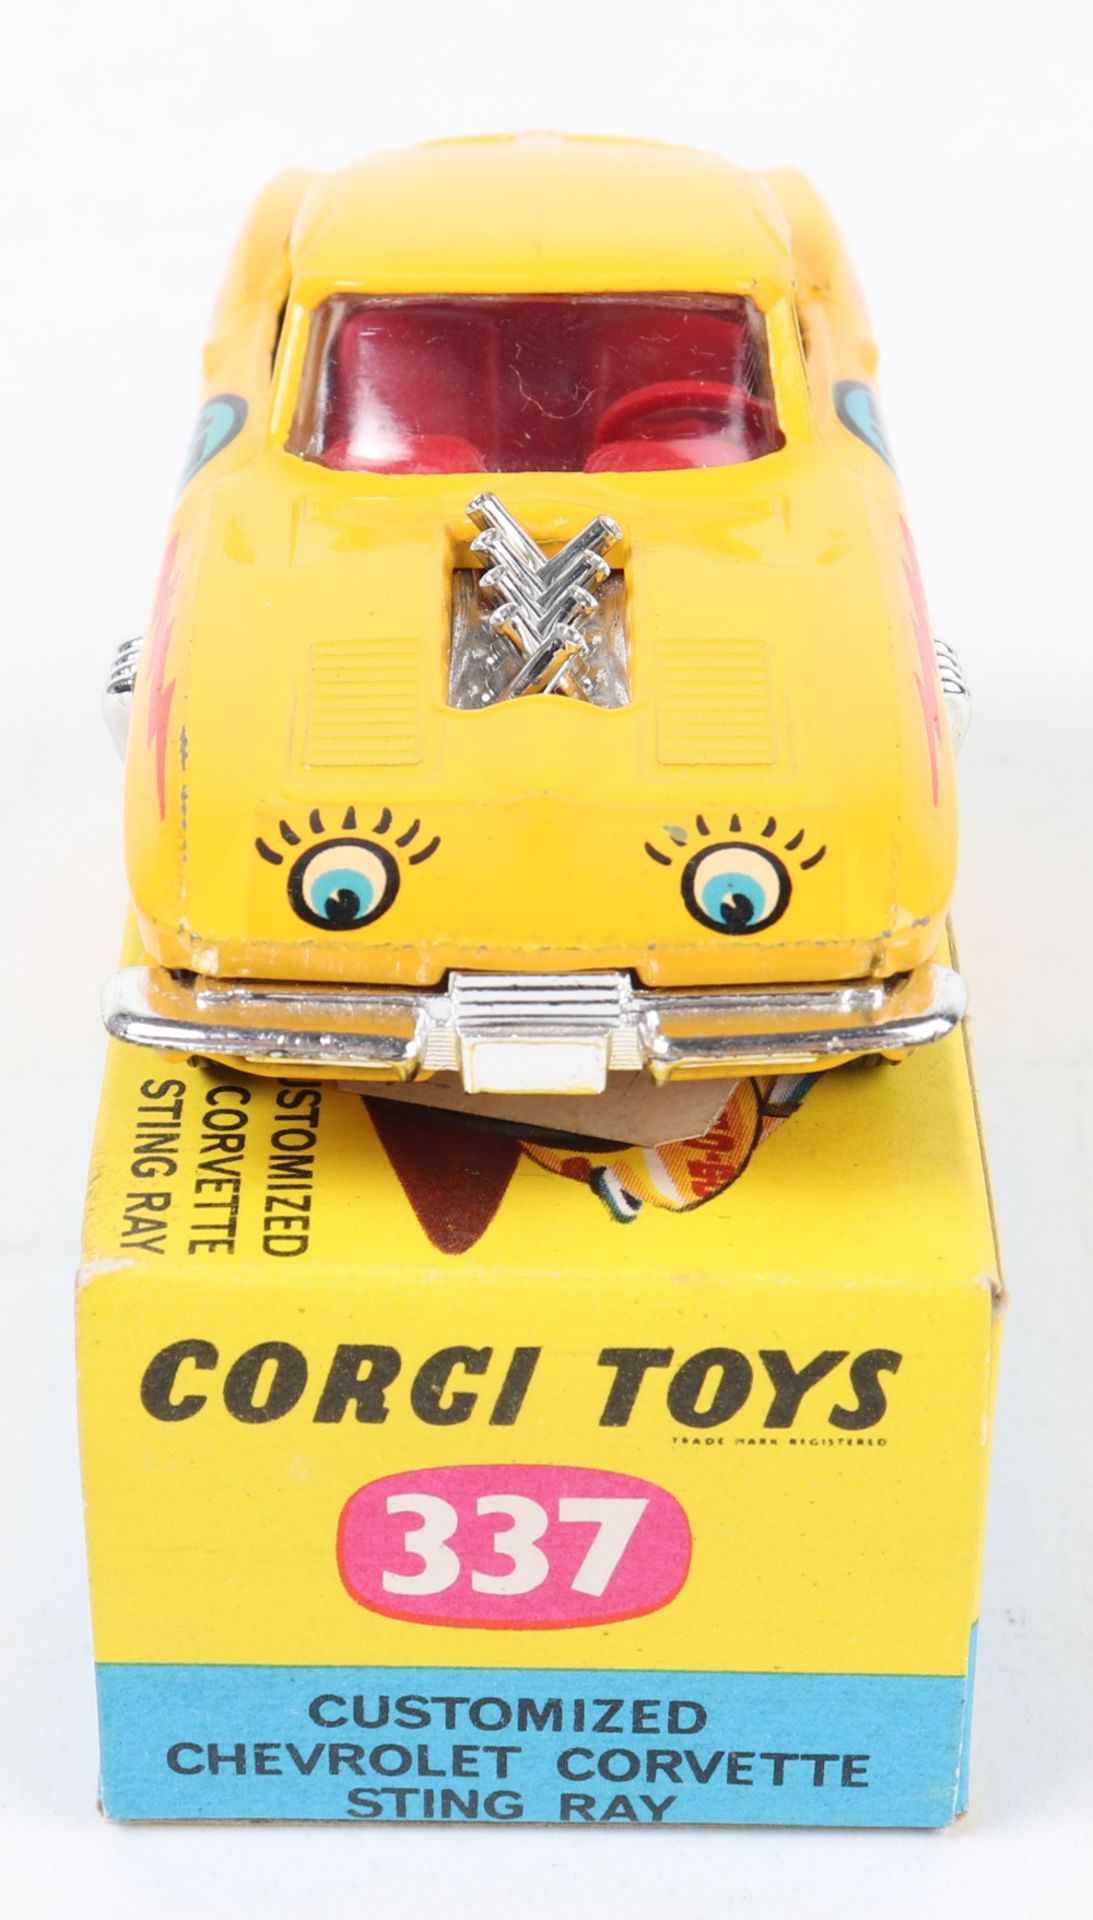 Corgi Toys 337 Customised Chevrolet Corvette Stingray - Image 4 of 5